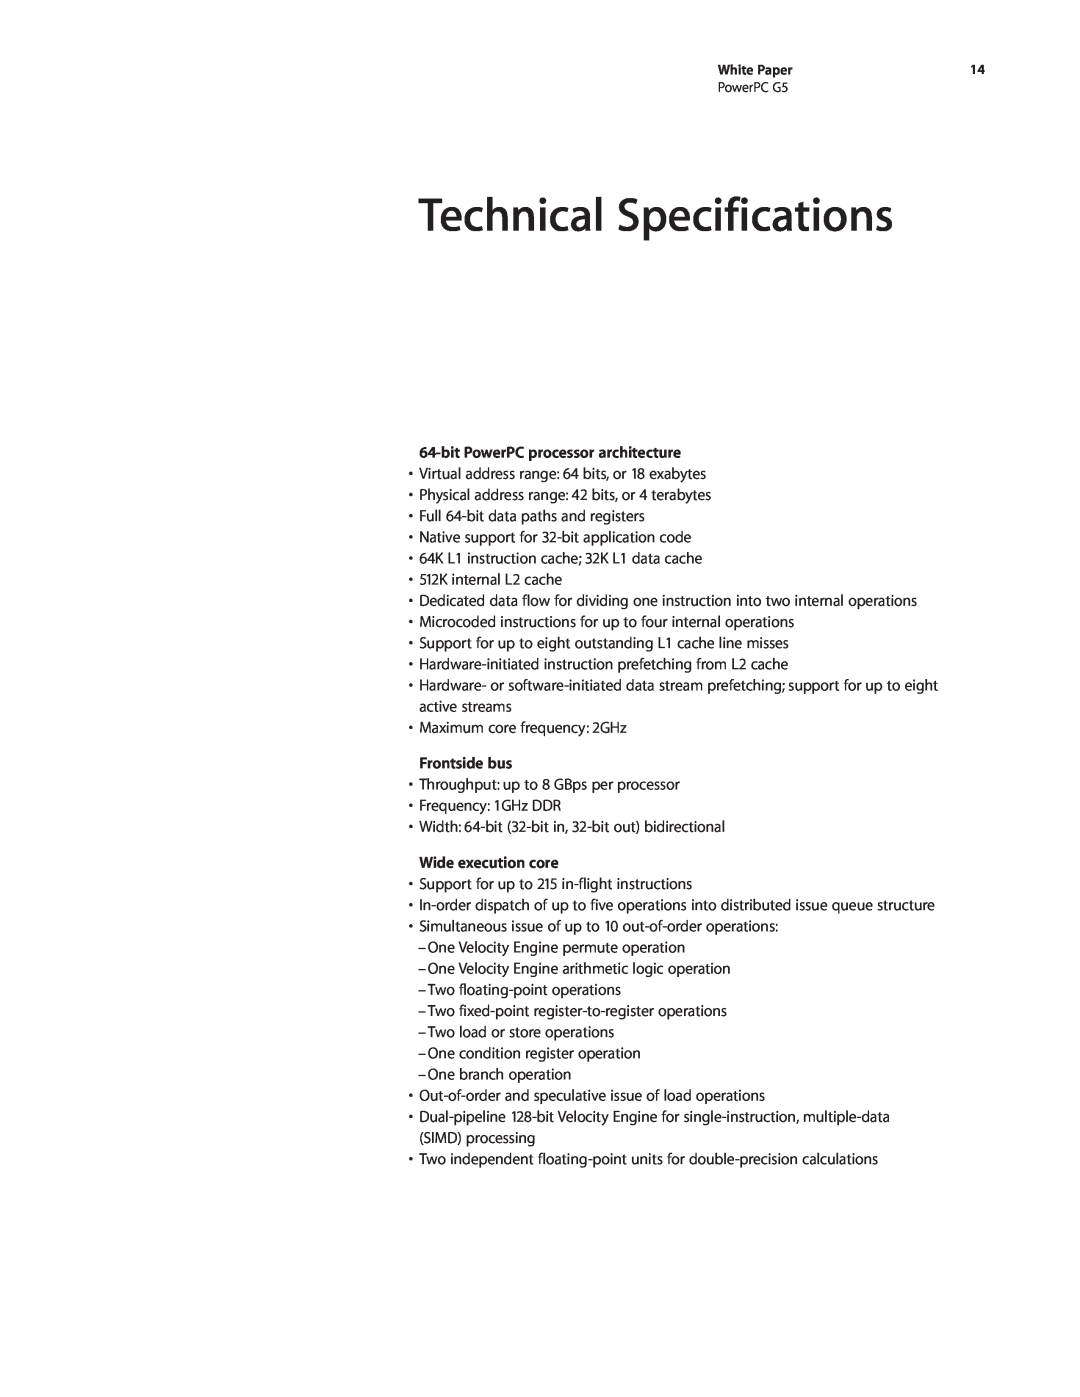 Apple PowerPC G5 manual Technical Specifications, bit PowerPC processor architecture, Frontside bus, Wide execution core 